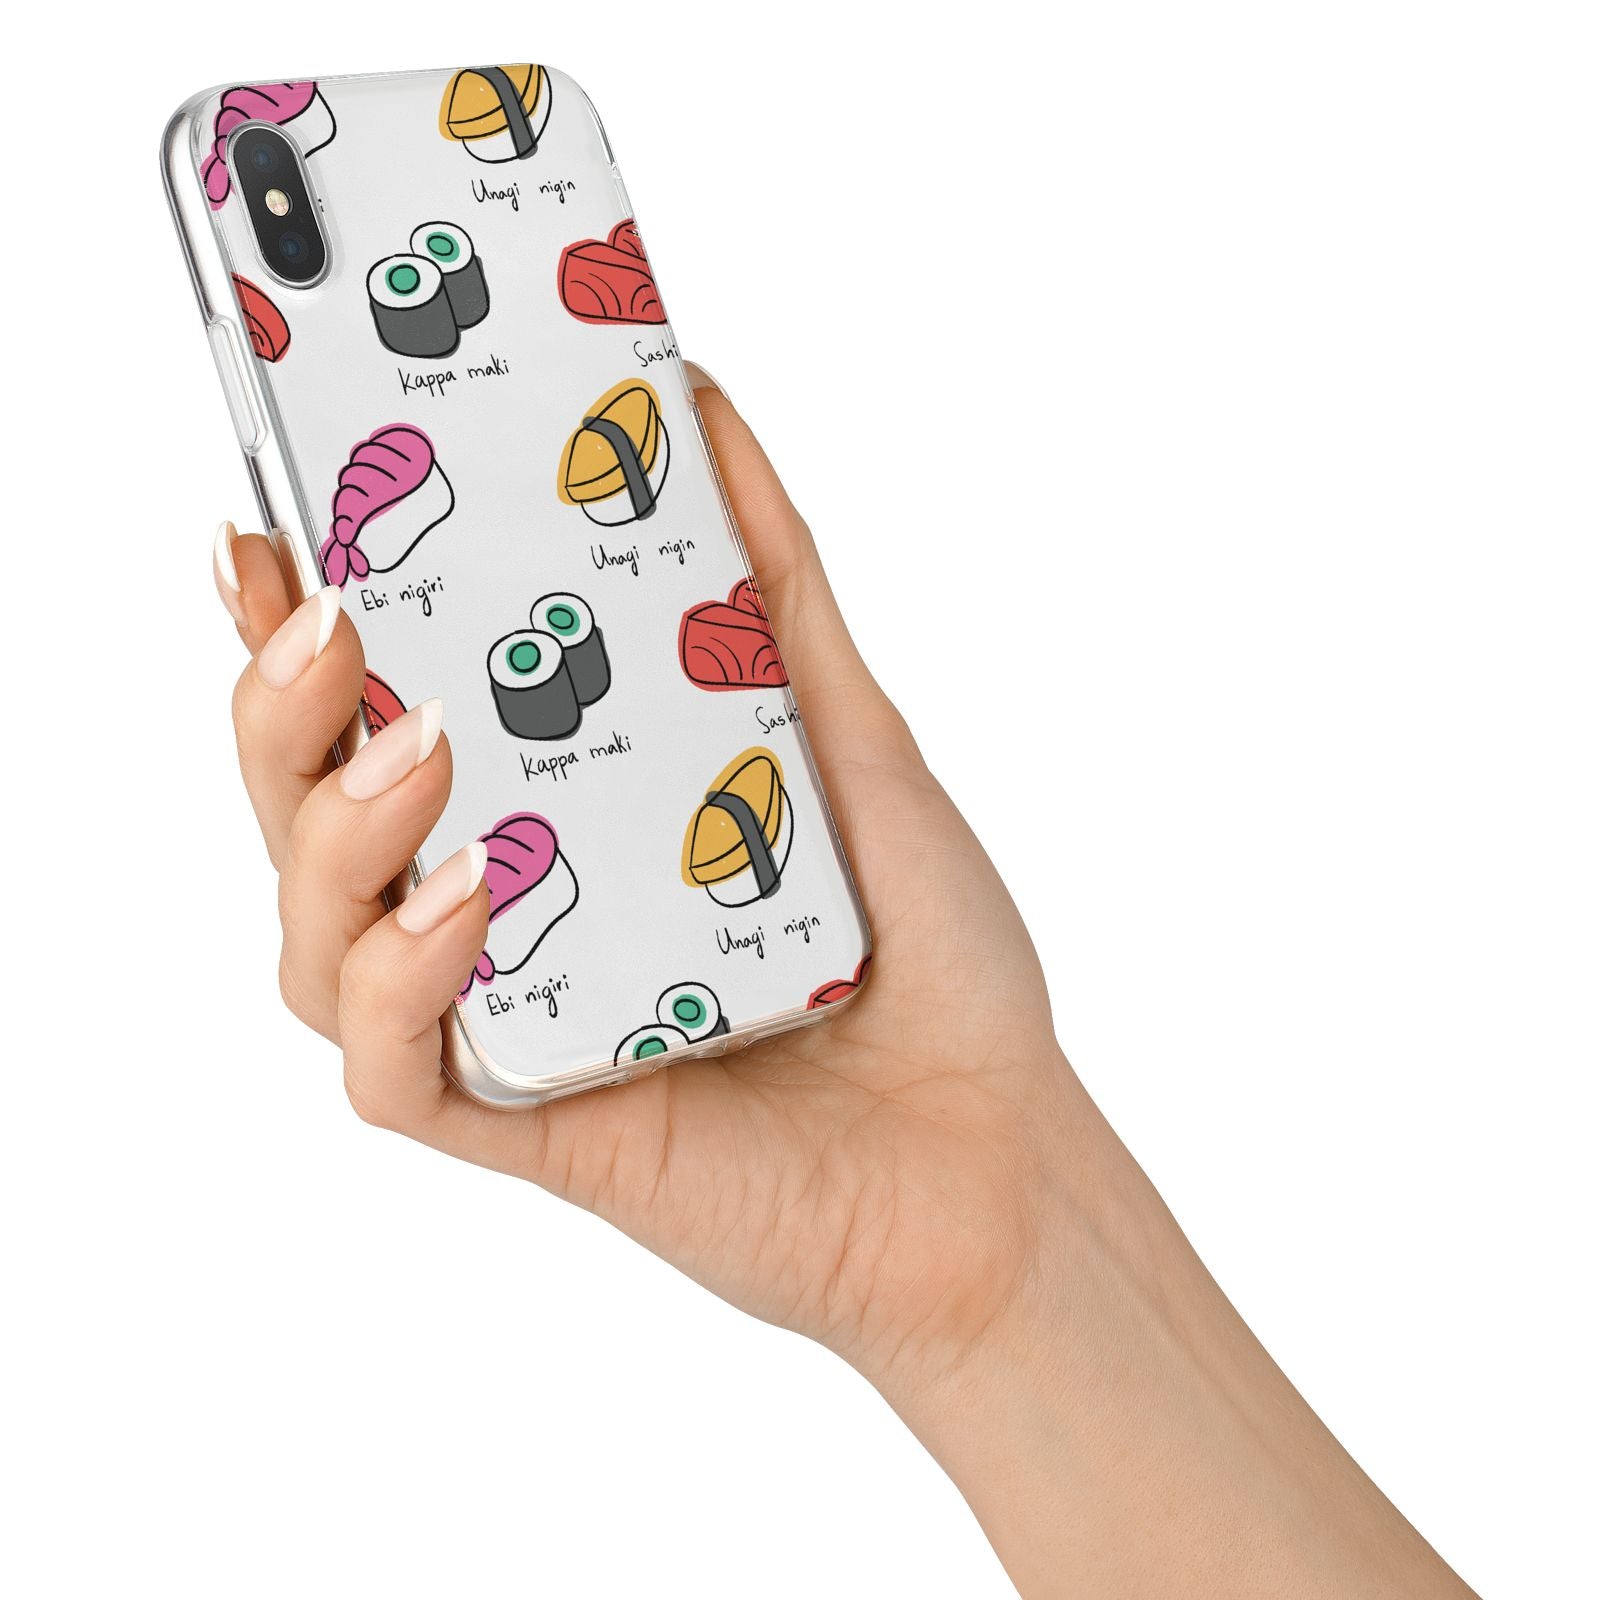 Sashimi Kappa Maki Sushi iPhone X Bumper Case on Silver iPhone Alternative Image 2